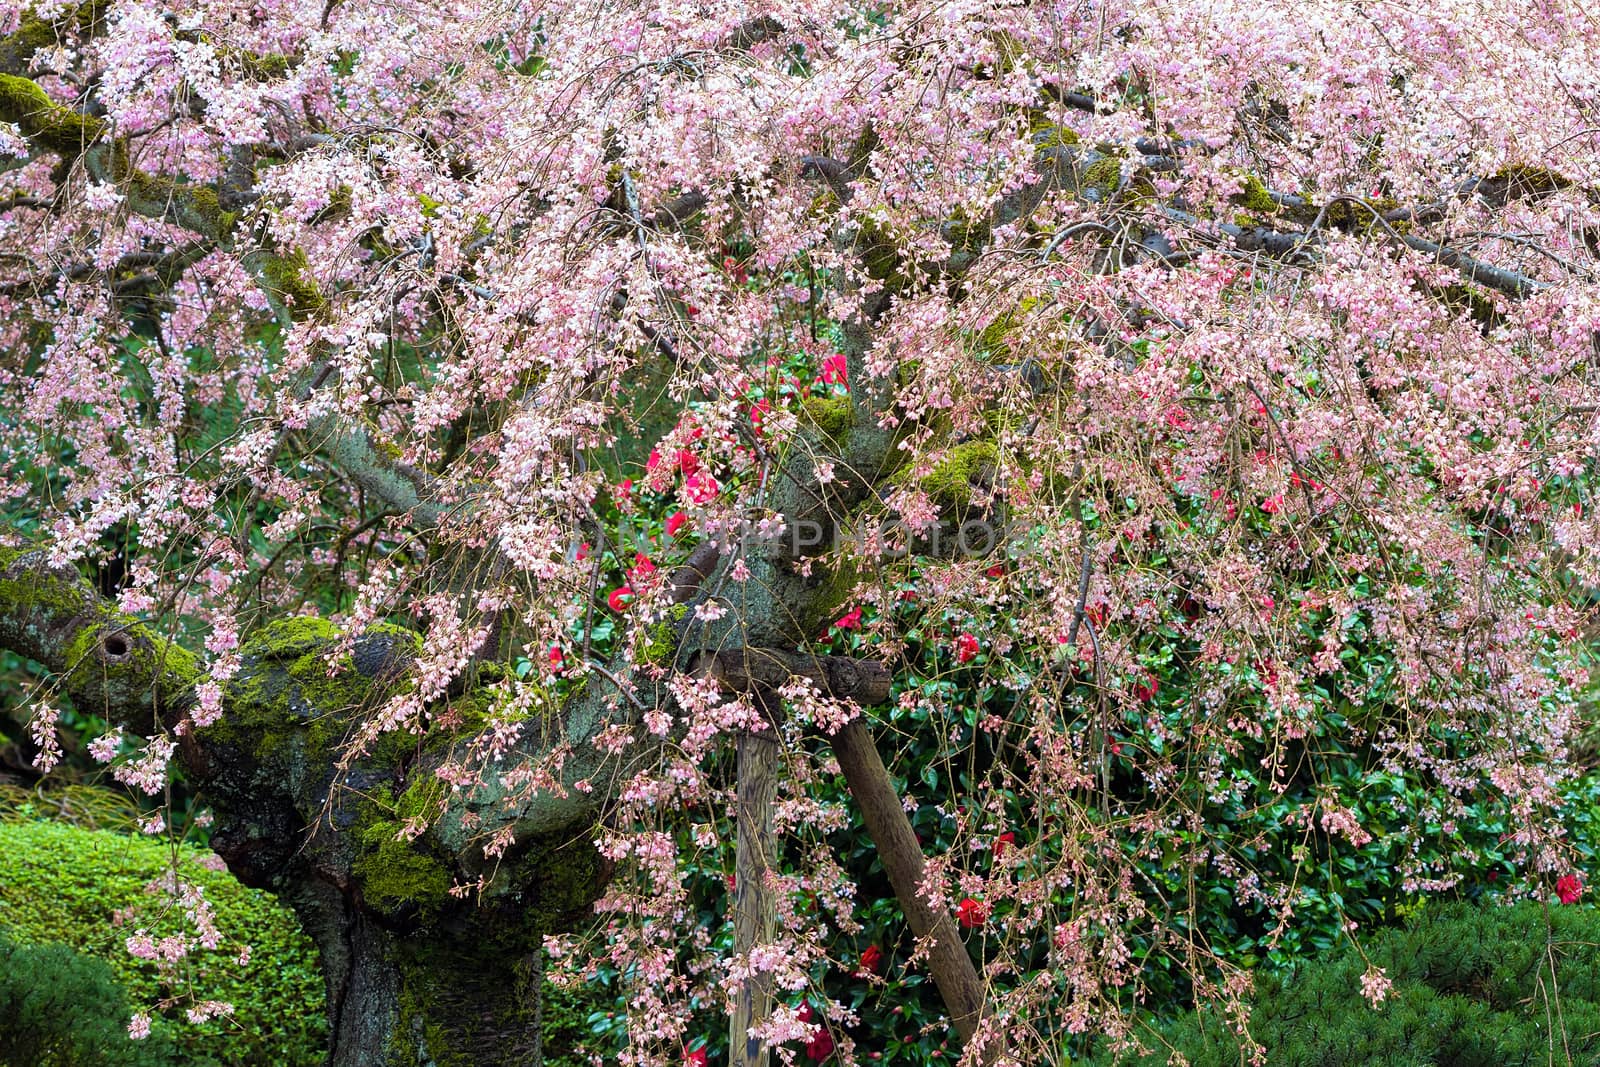 Old Cherry Blossom Tree in full bloom at Japanese Garden in Springtime